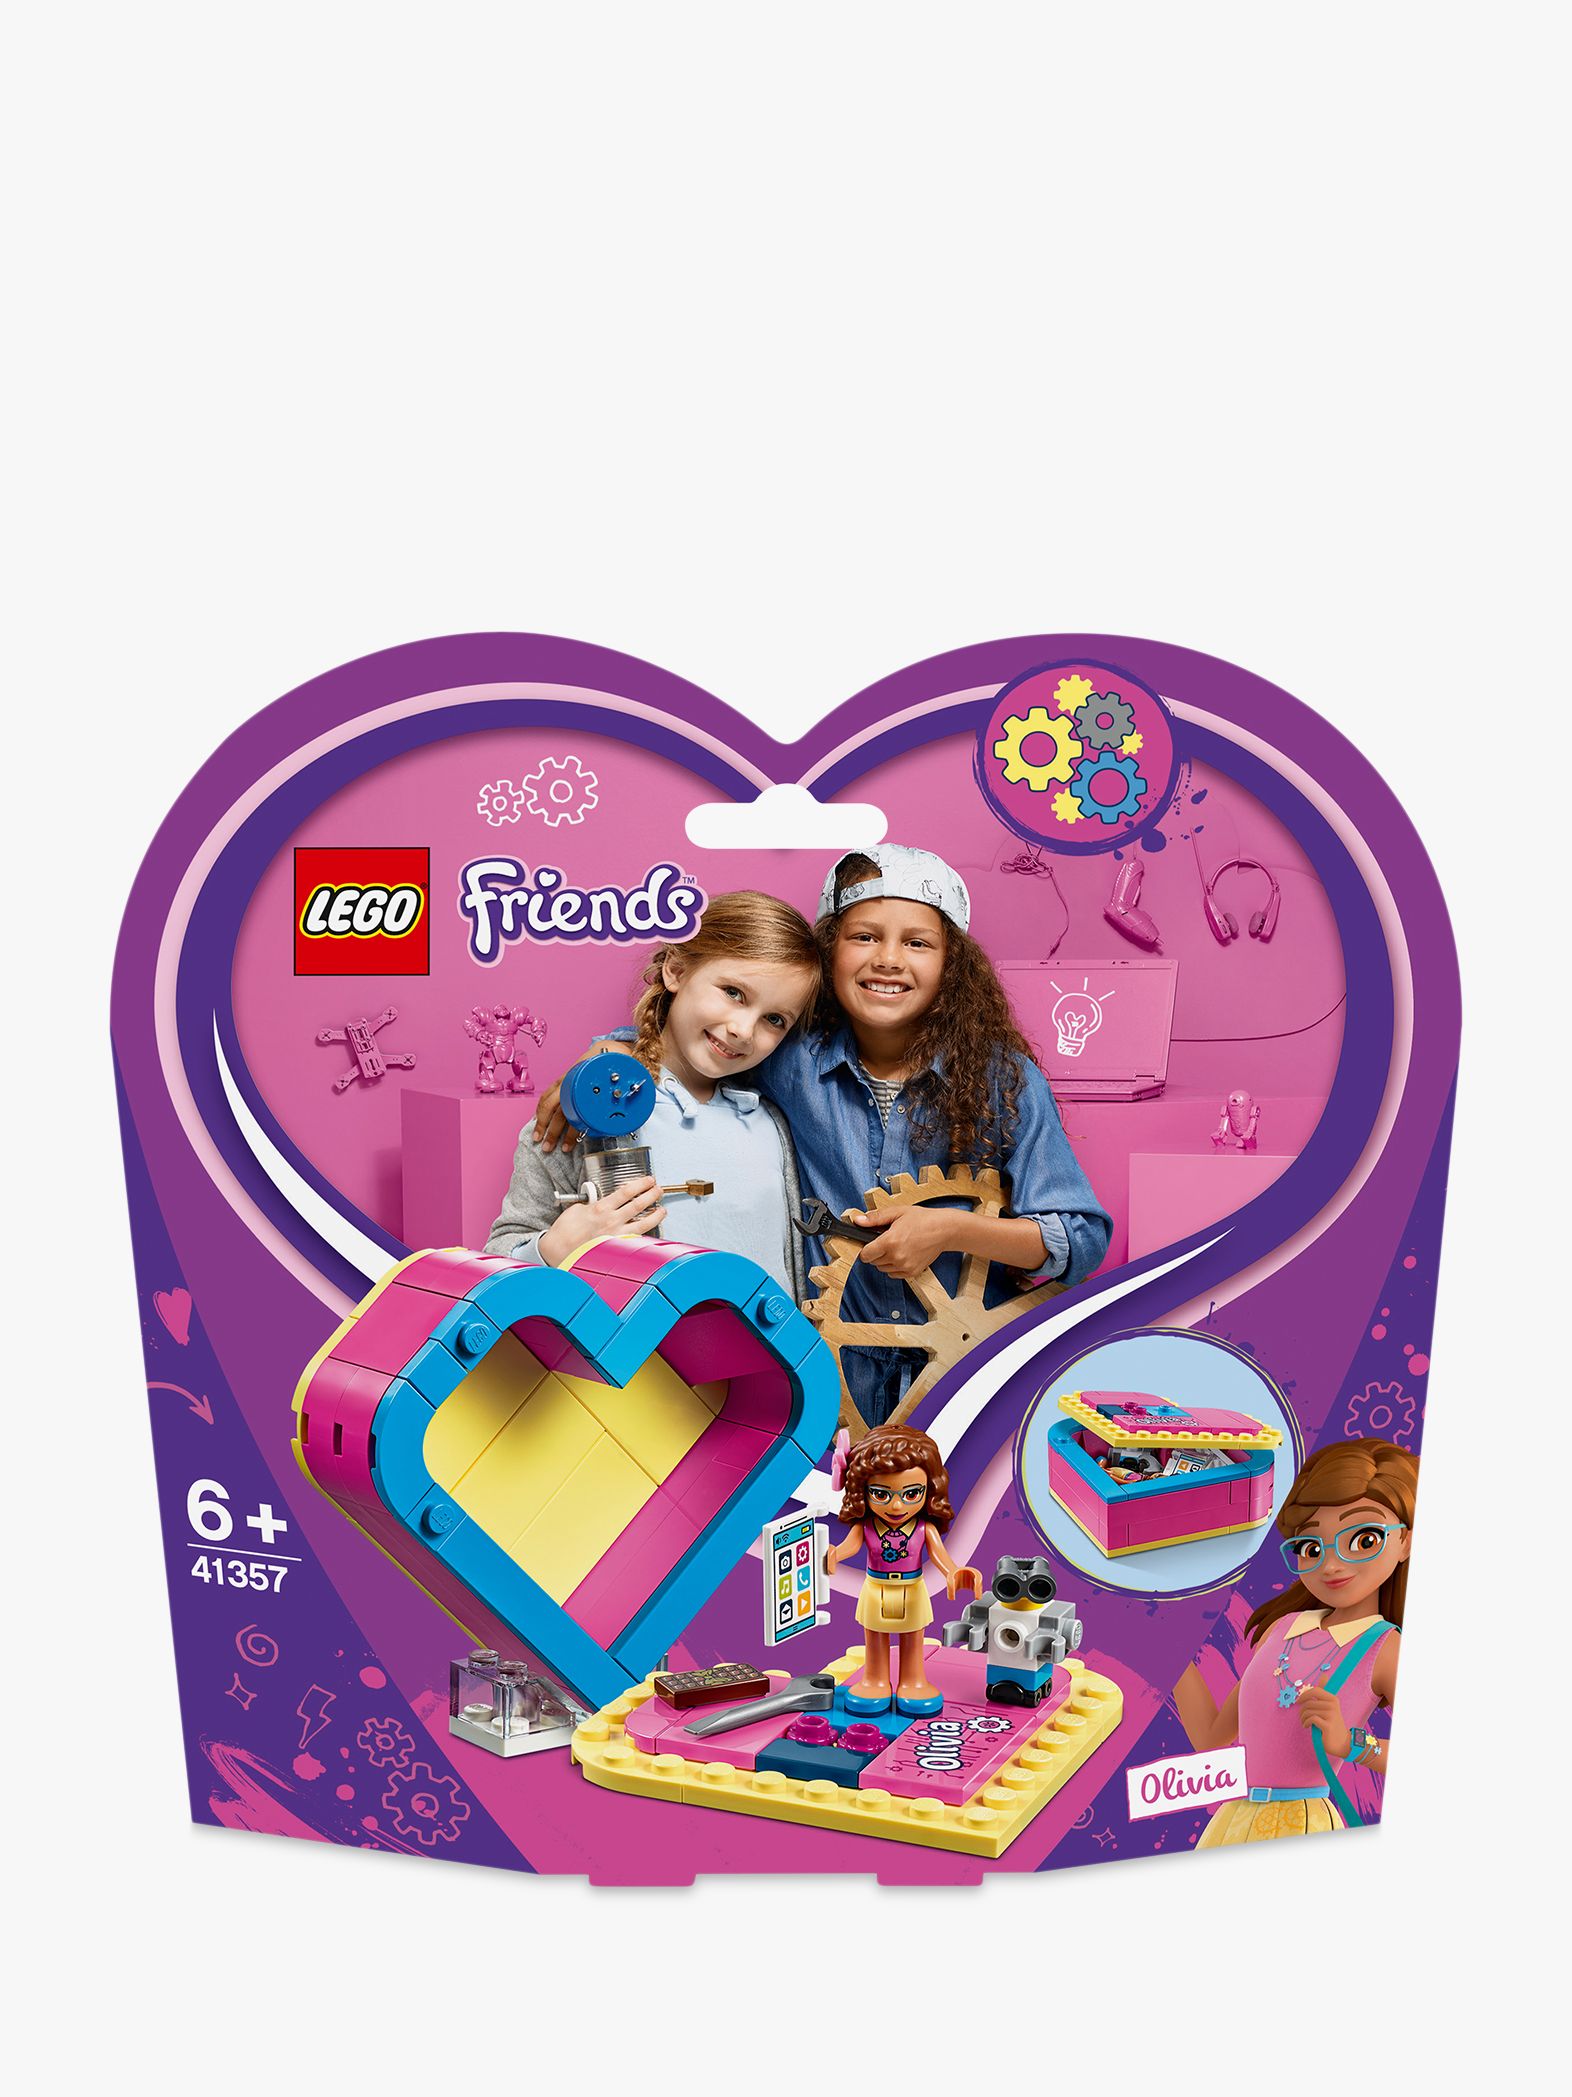 LEGO Friends 41357 Olivia's Heart Box at John Lewis & Partners